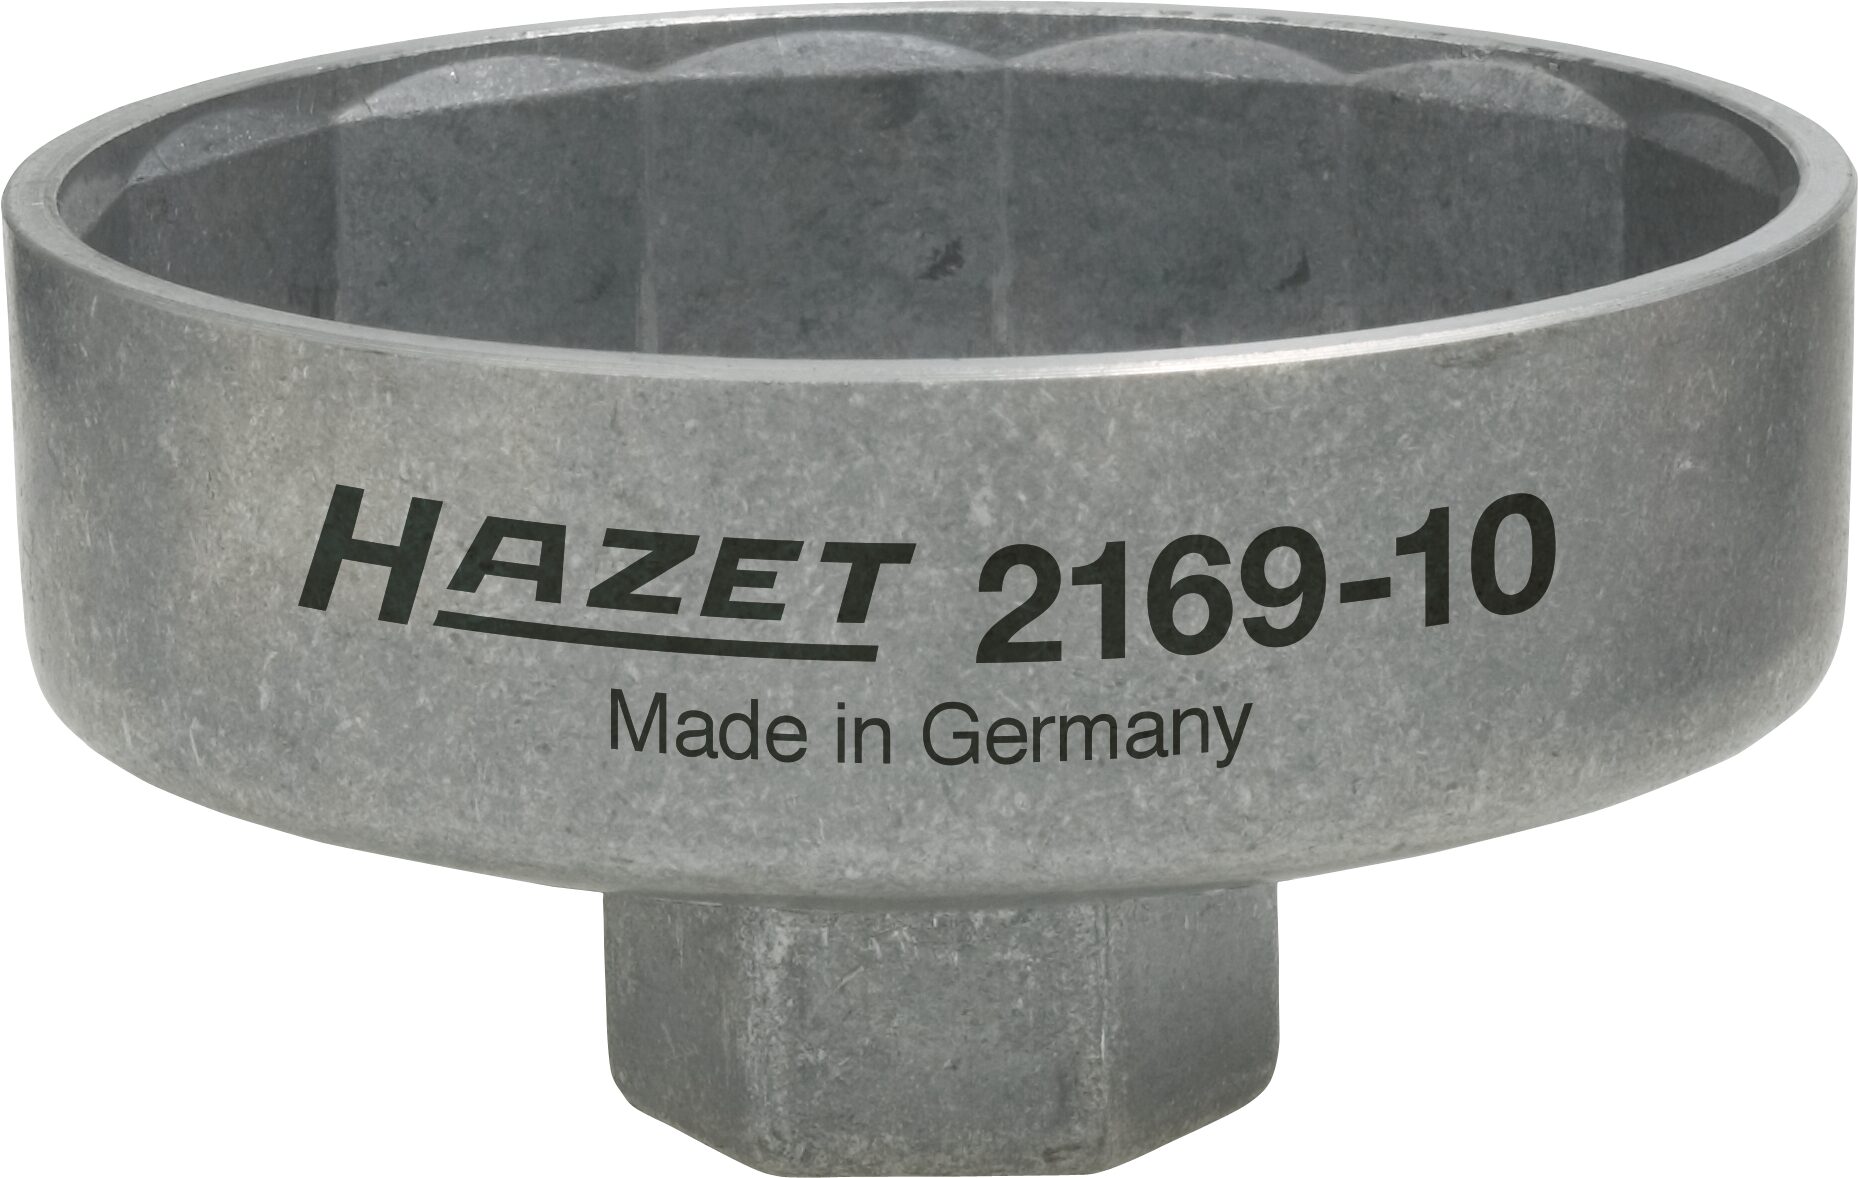 HAZET Ölfilter-Schlüssel 2169-10 · Vierkant hohl 10 mm (3/8 Zoll) · Außen 14-kant Profil · 82 mm